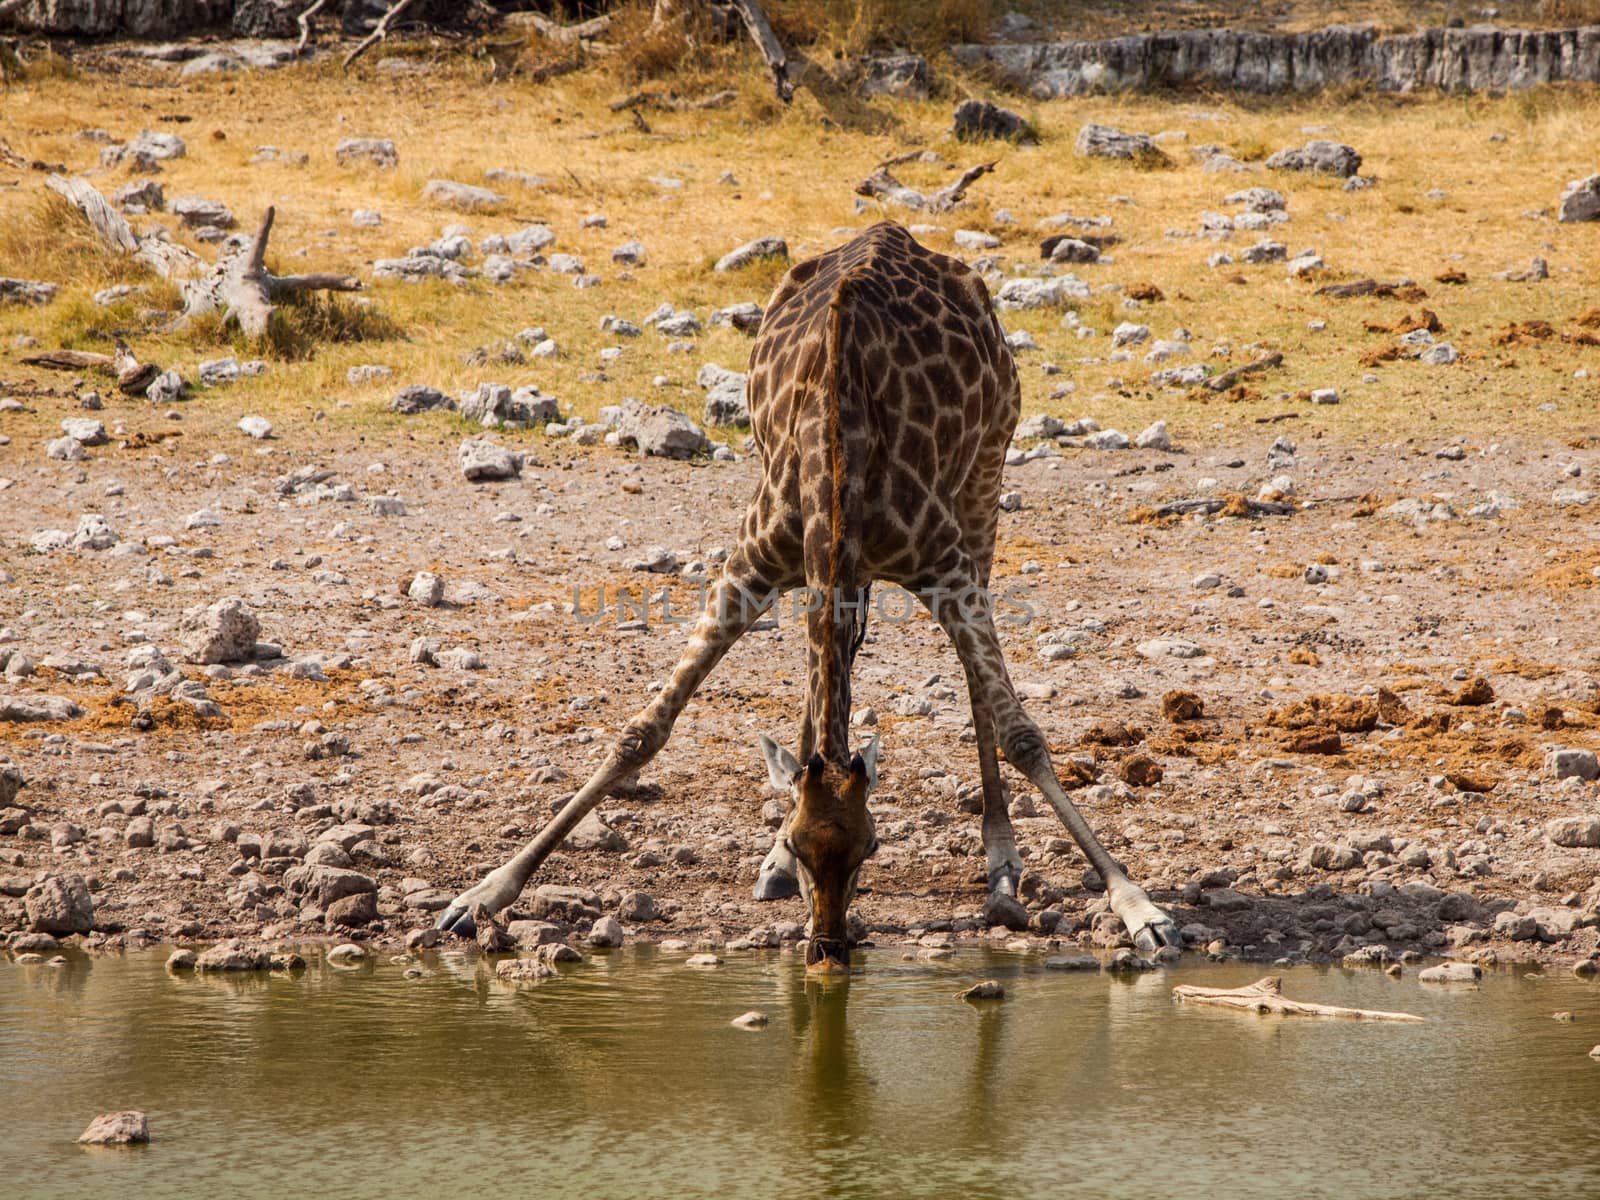 Thirsty giraffe drinking from waterhole (Etosha National Park, Namibia)